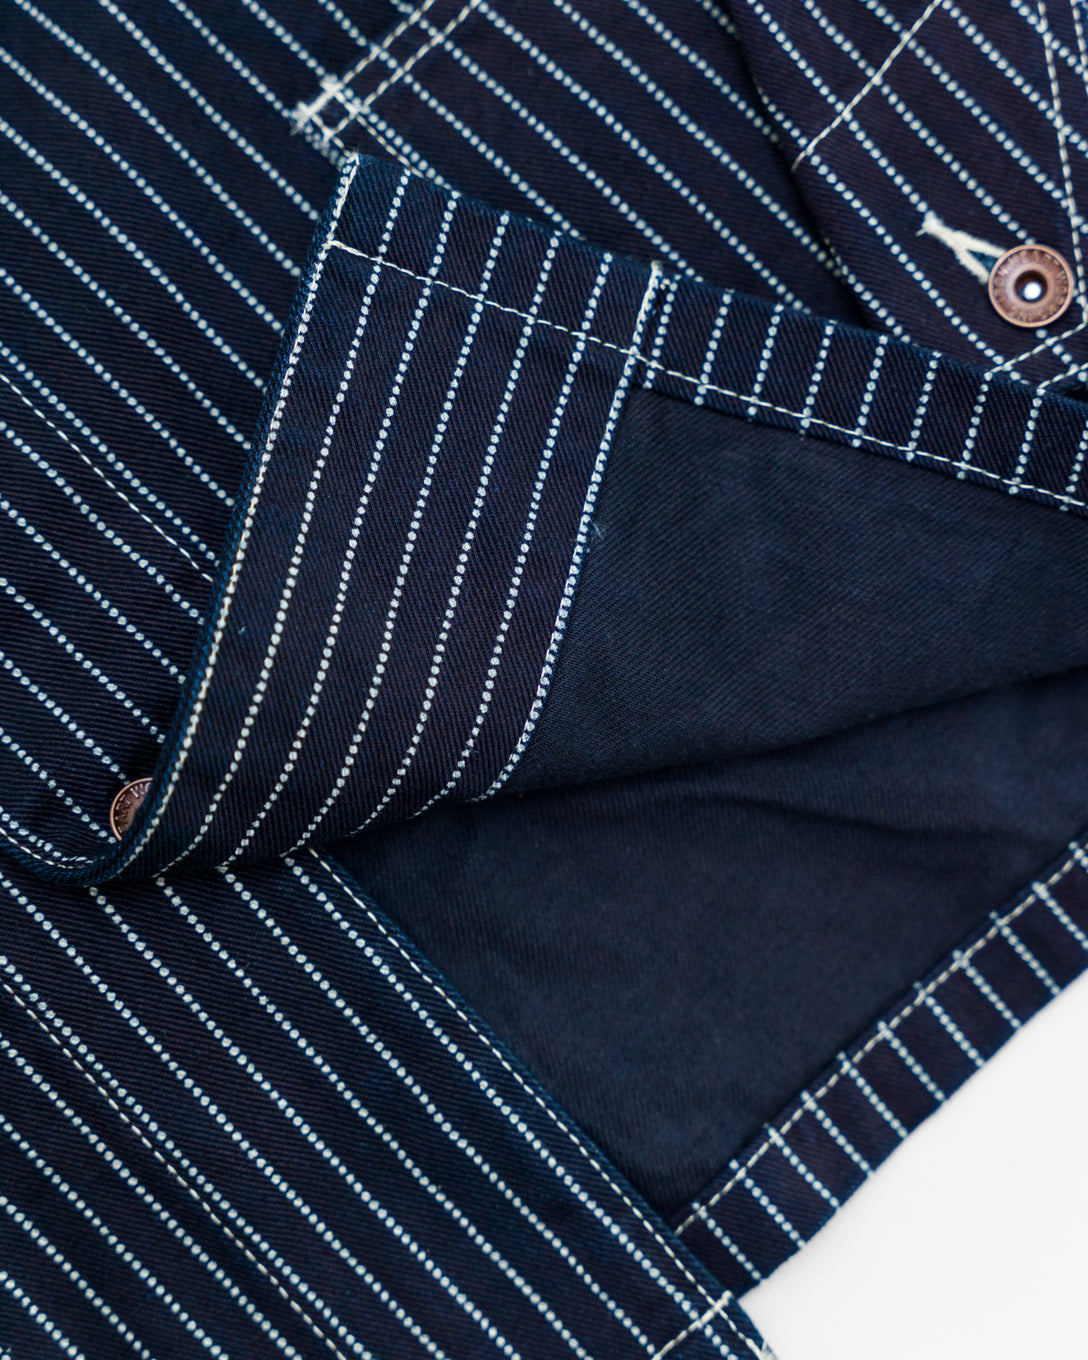 Dark Royal Blue And White Stripe - Indigo Pinstripe Suit - L